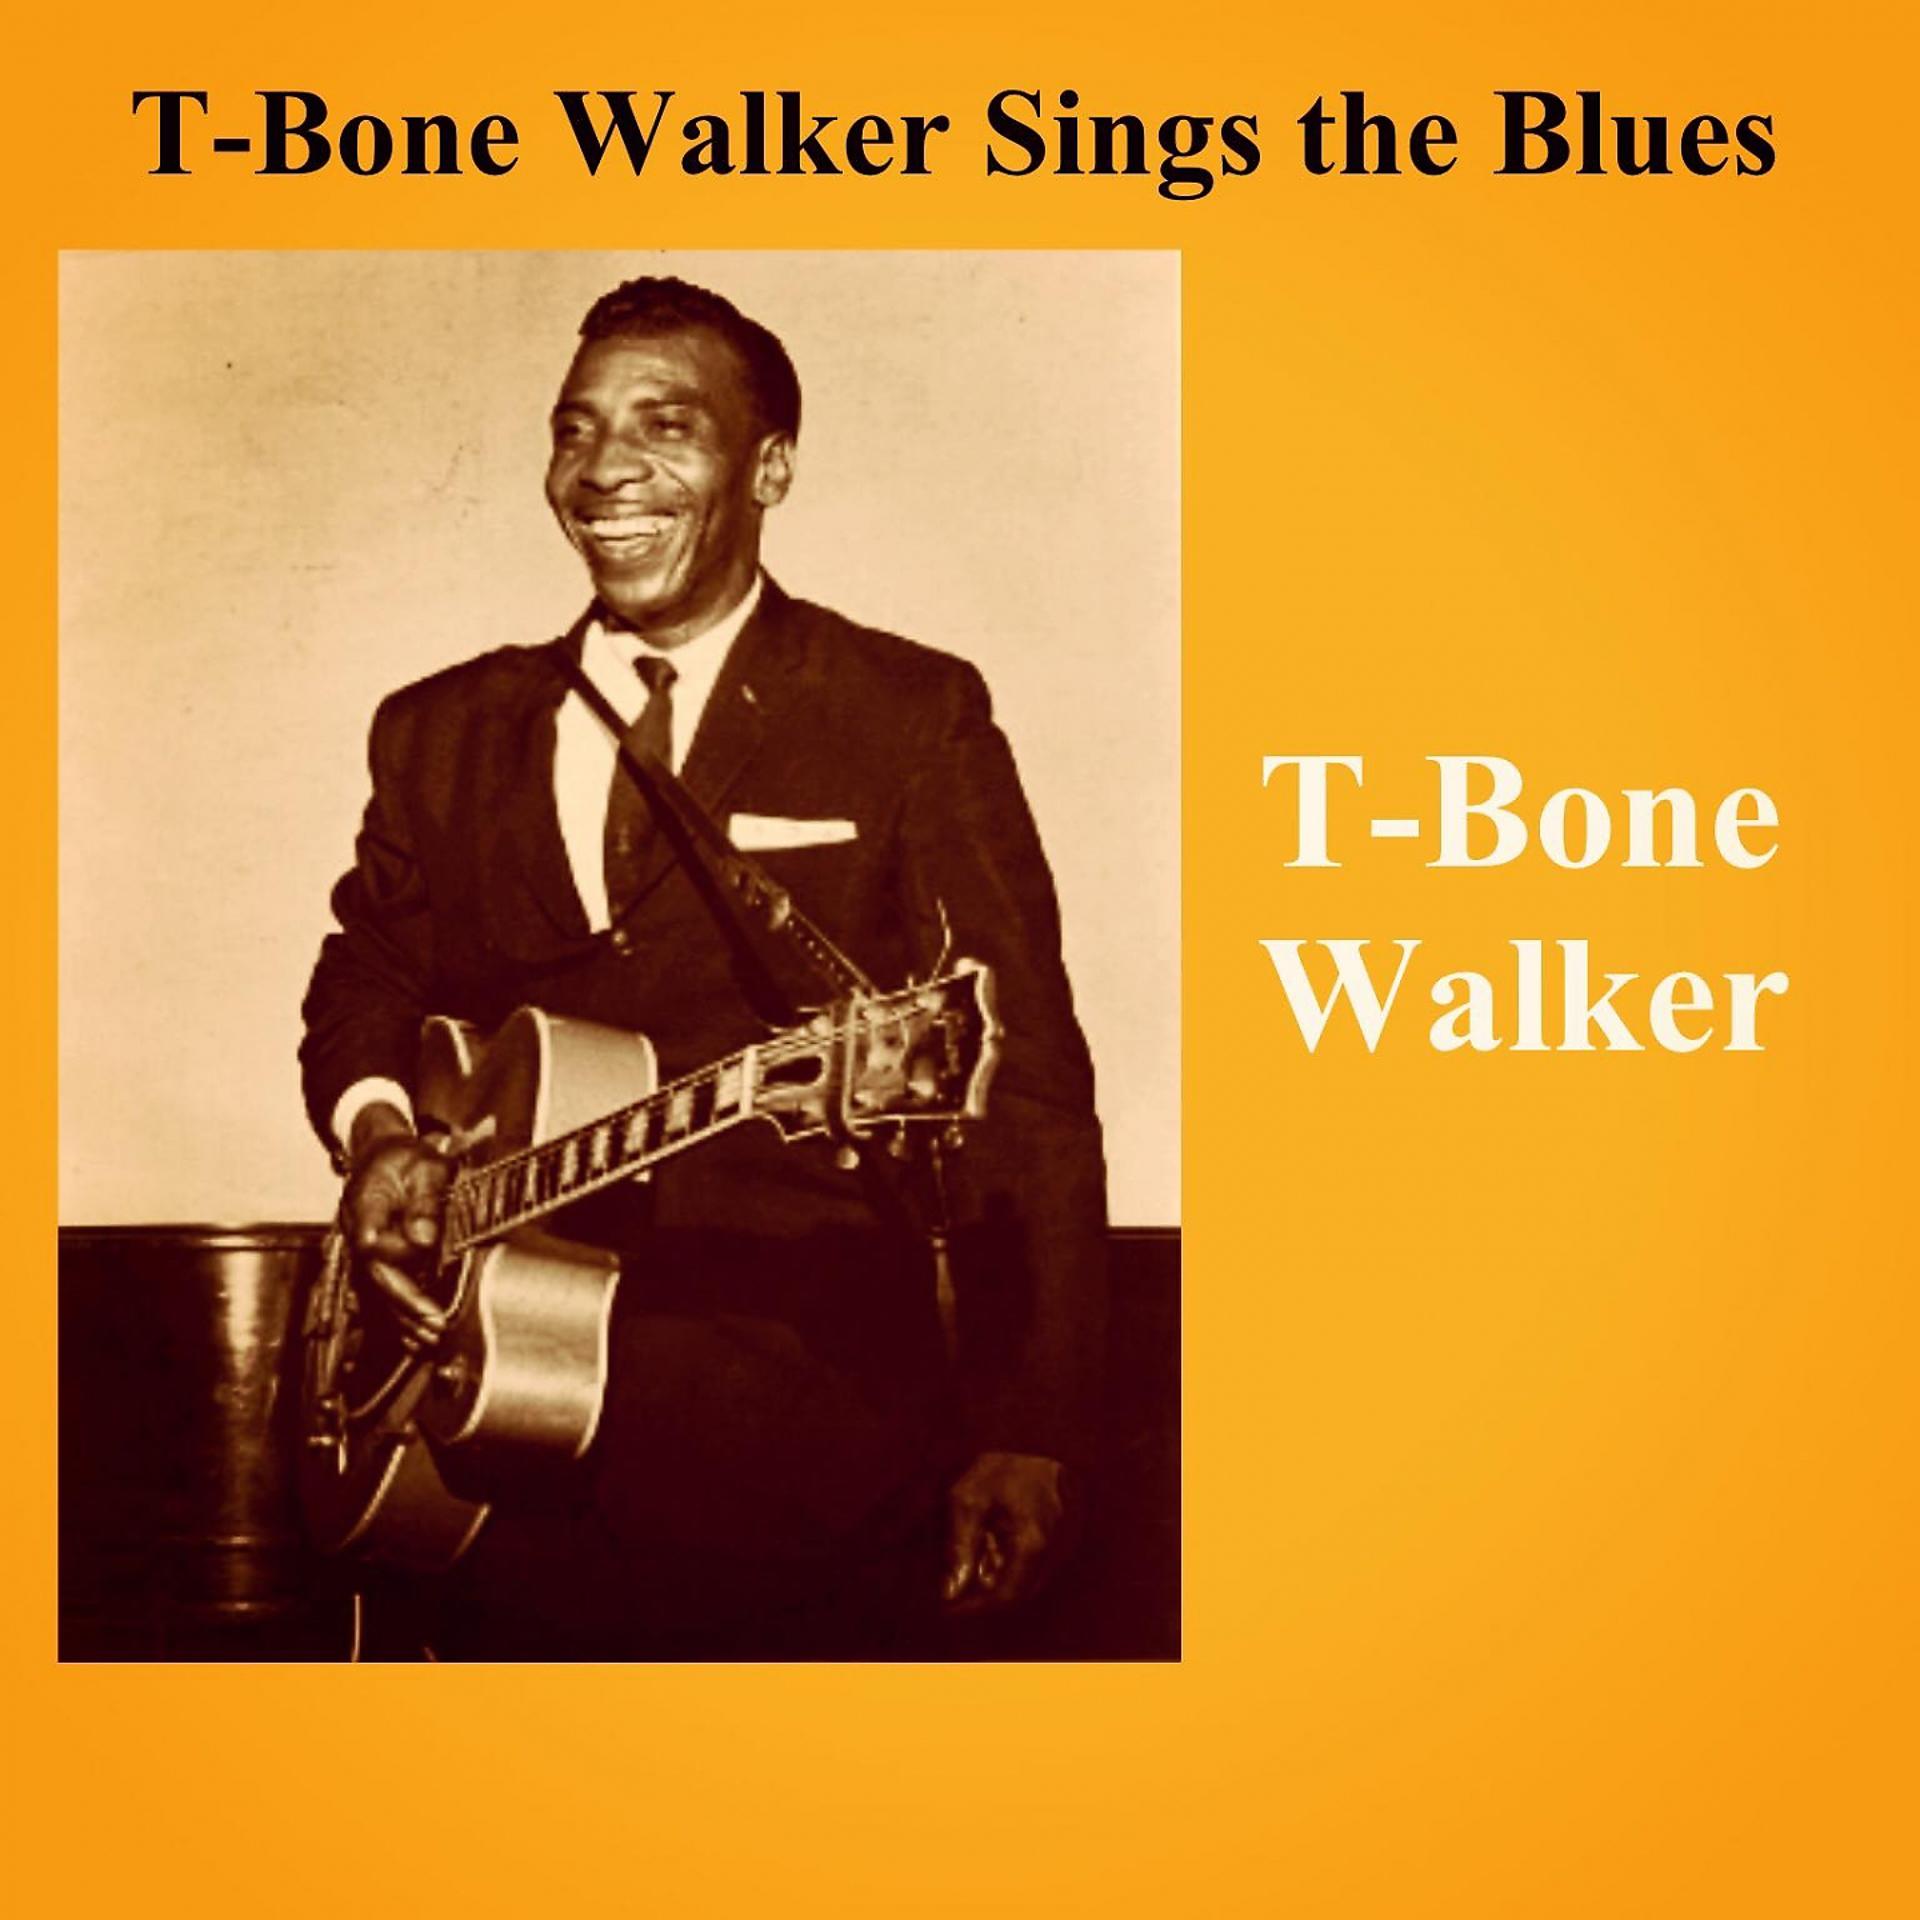 Walker sing. Blue the Bone. Песня struggling Blues t Bone Walker. Bonewalker Theme.